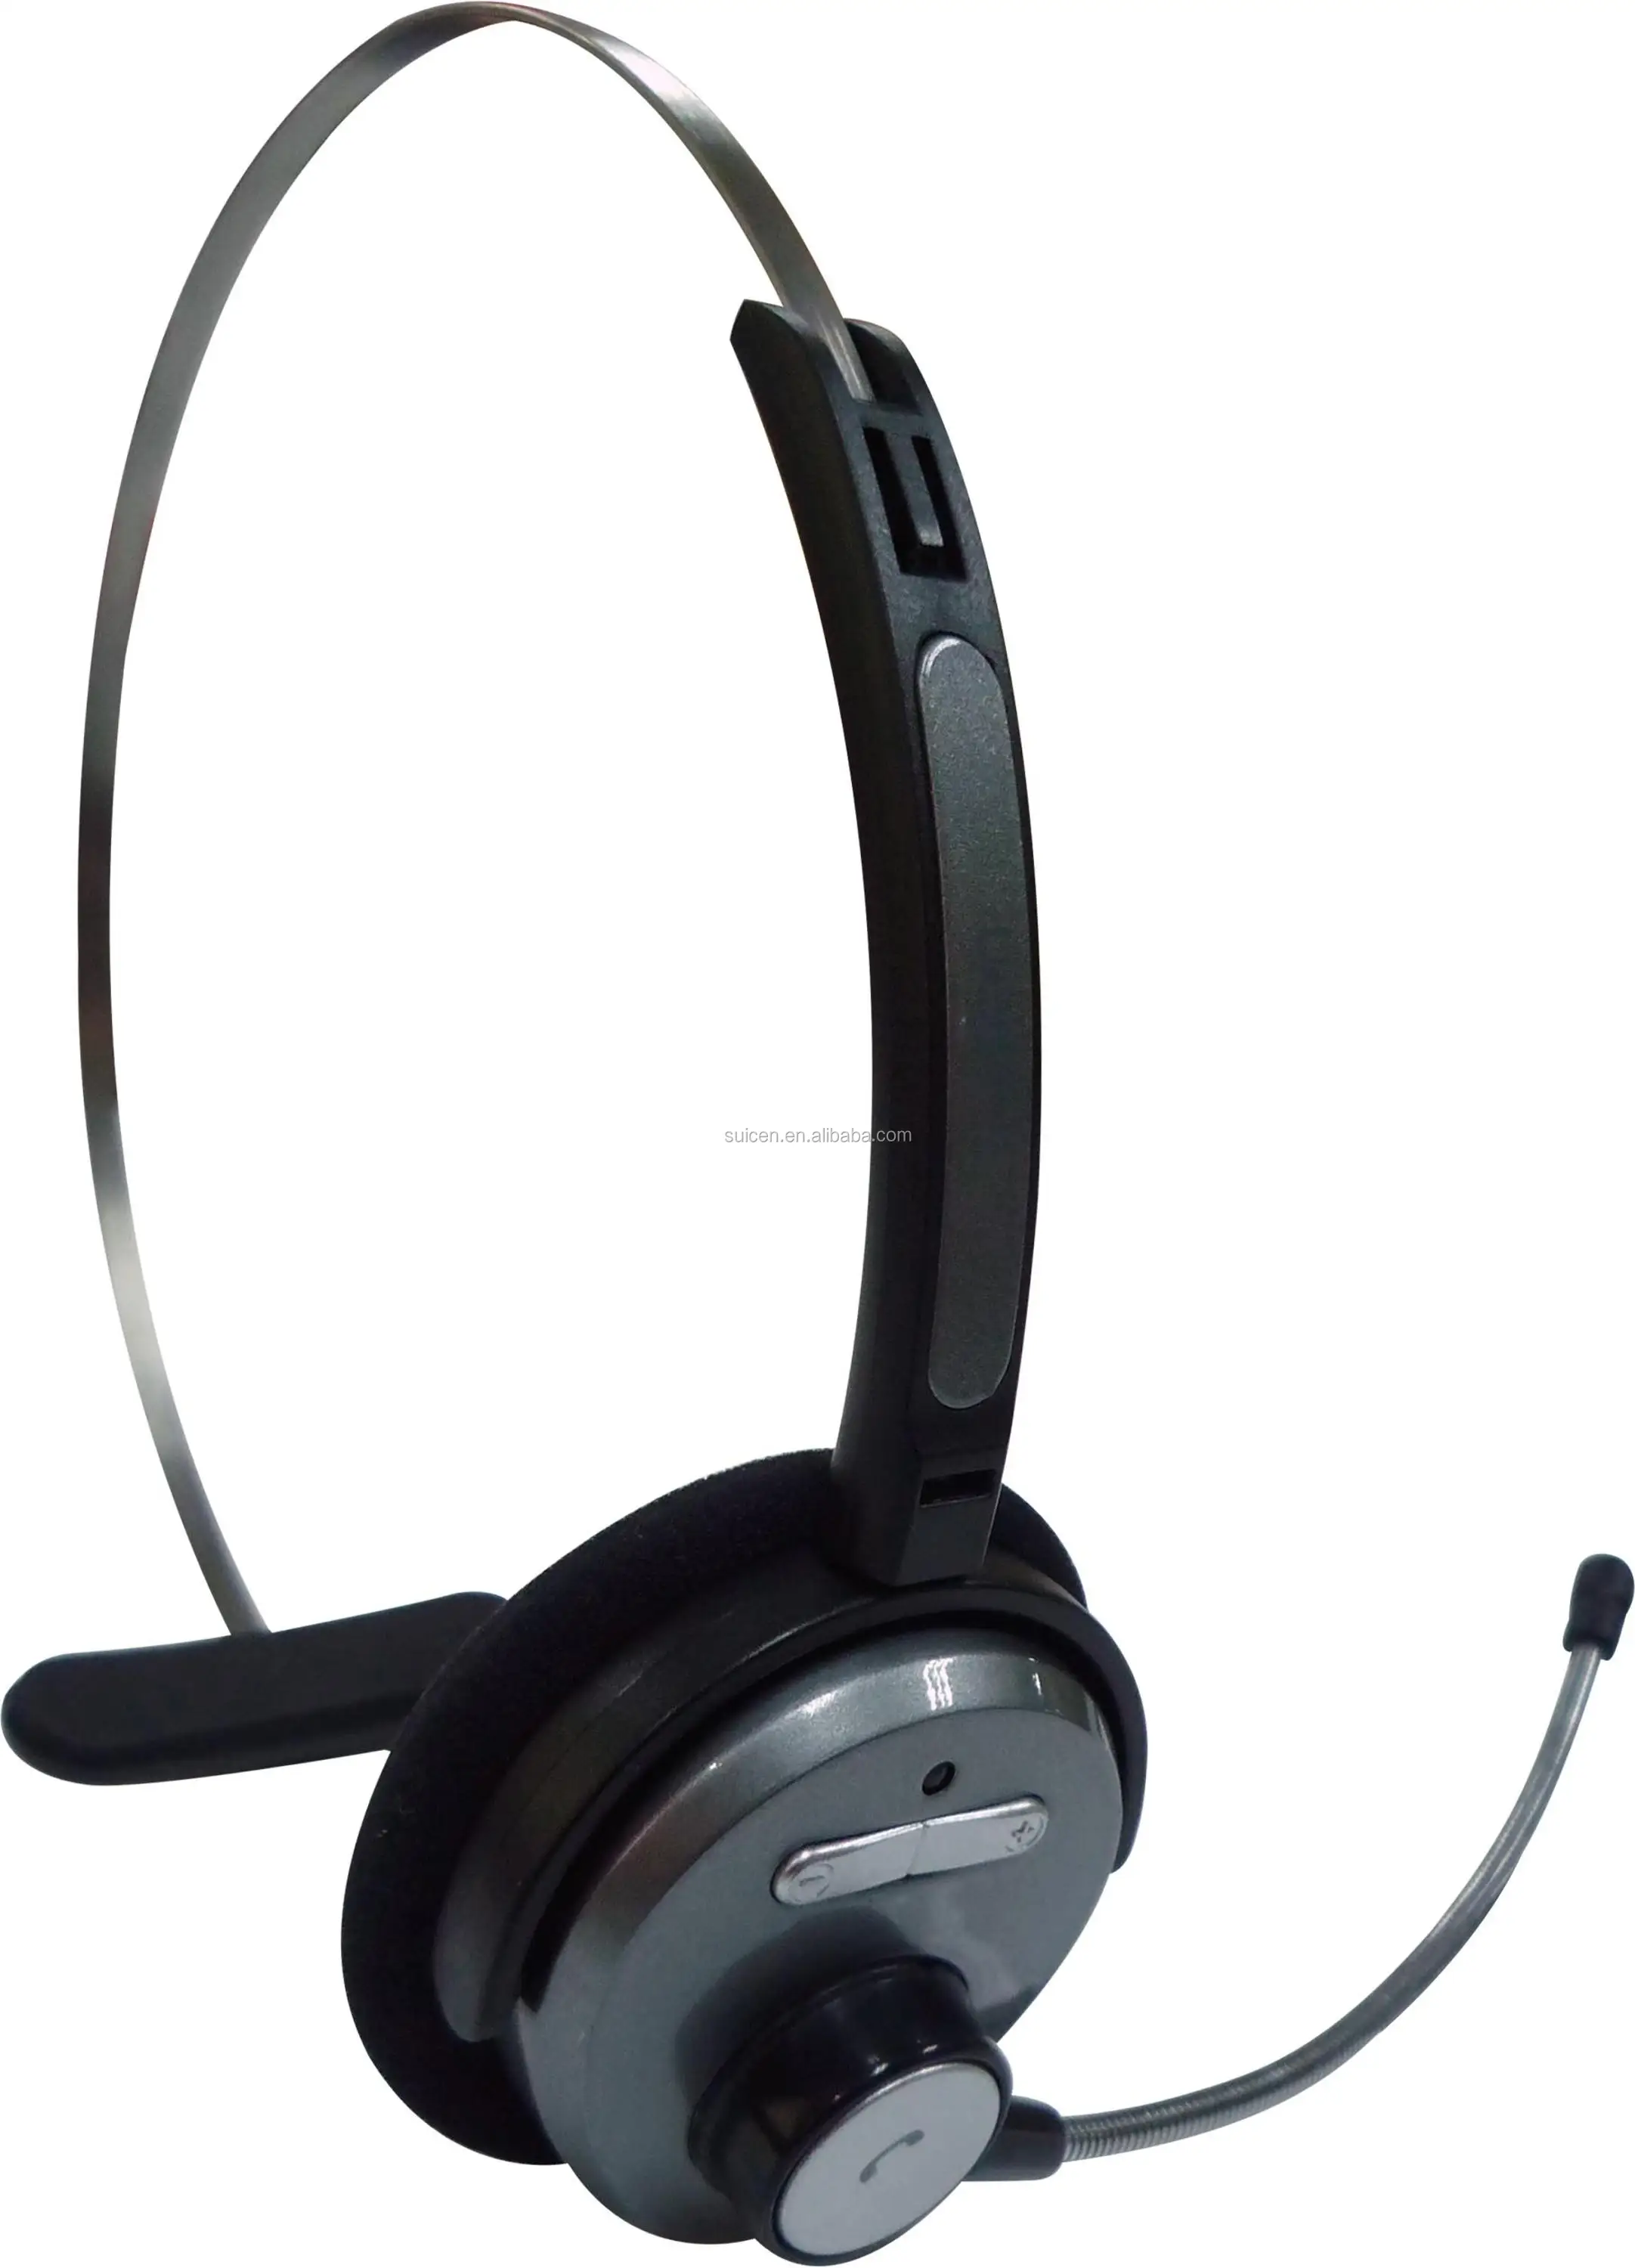 Sx 923 Mono Bluetooth Headphone For Office Using View Mono Bluetooth Headphone Suicen Product Details From Shenzhen Shuaixian Electronic Equipment Co Ltd On Alibaba Com